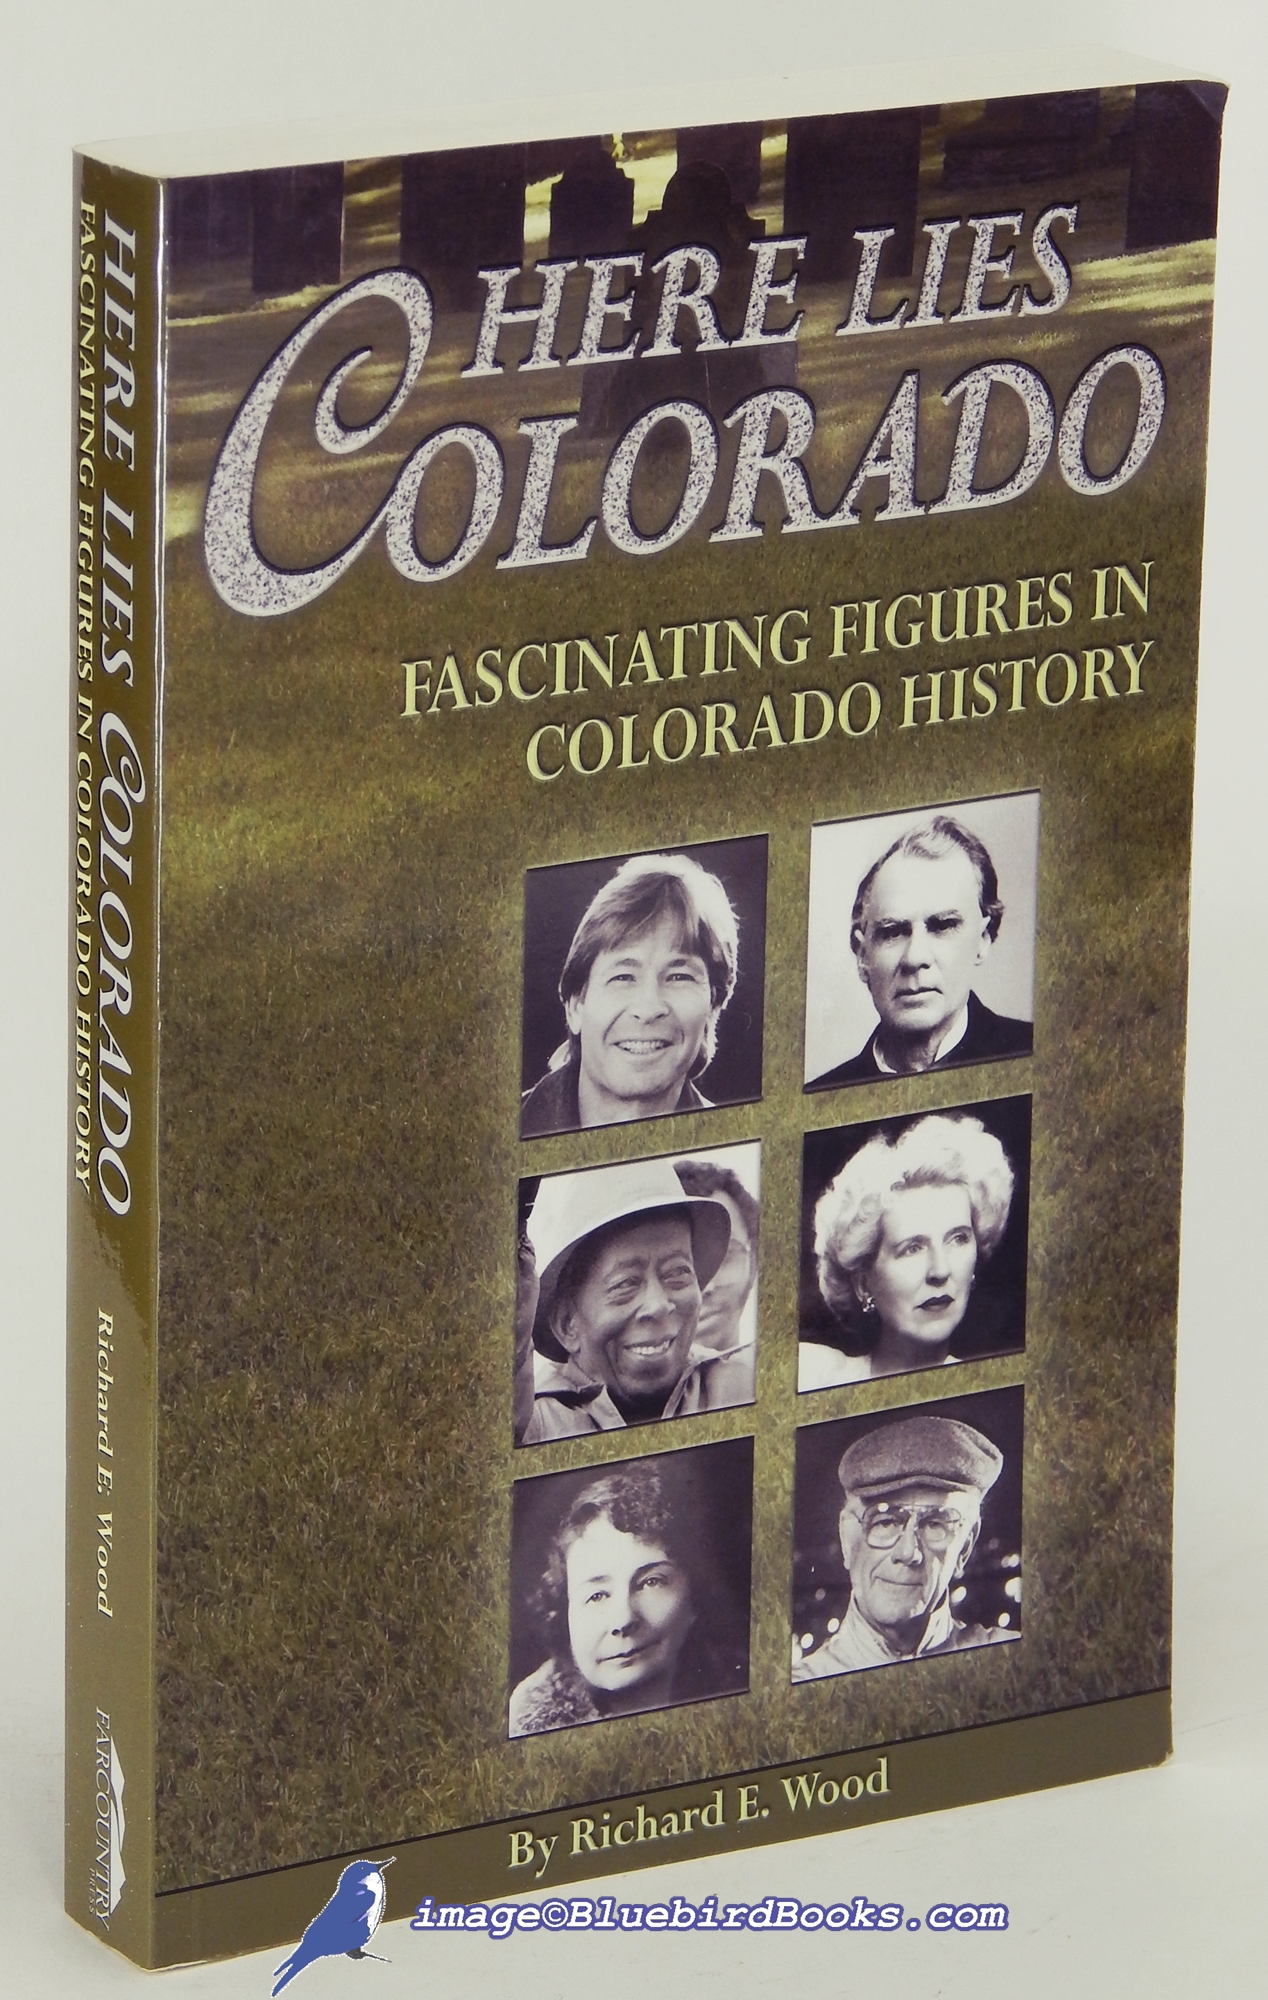 WOOD, RICHARD E. - Here Lies Colorado: Fascinating Figures in Colorado History